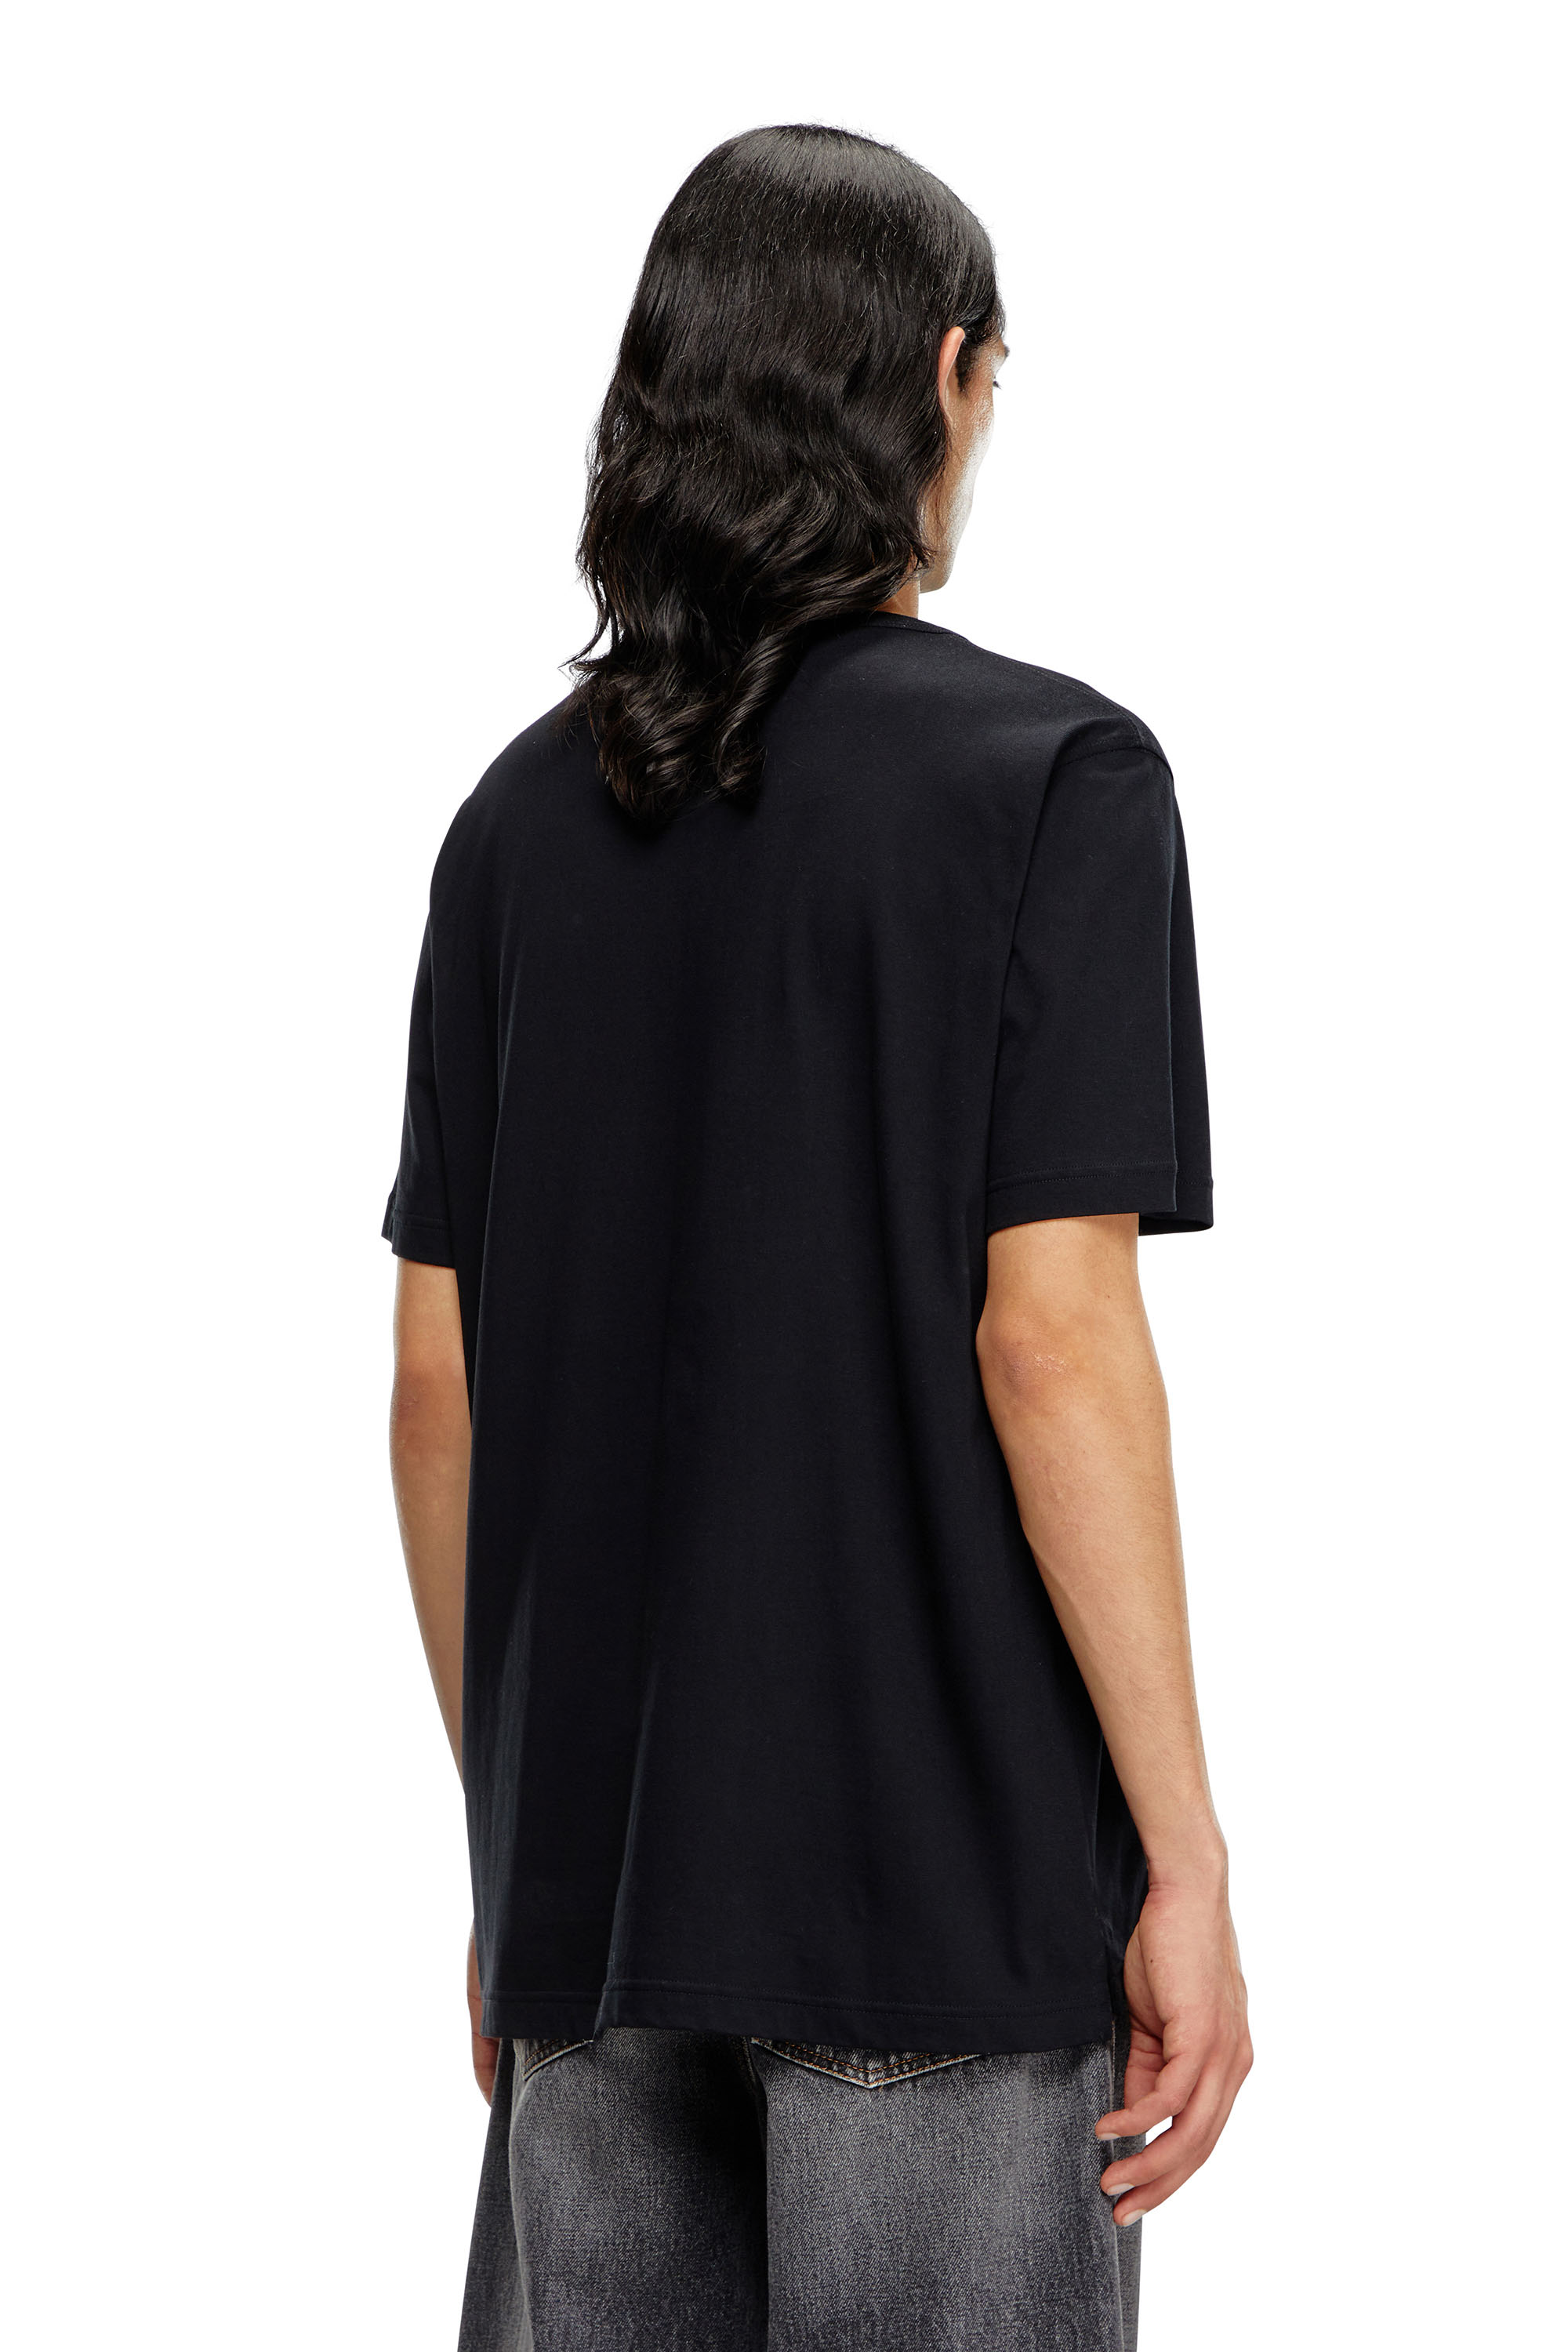 Buy Full Sleeve Piqué Shirt in Black Online India